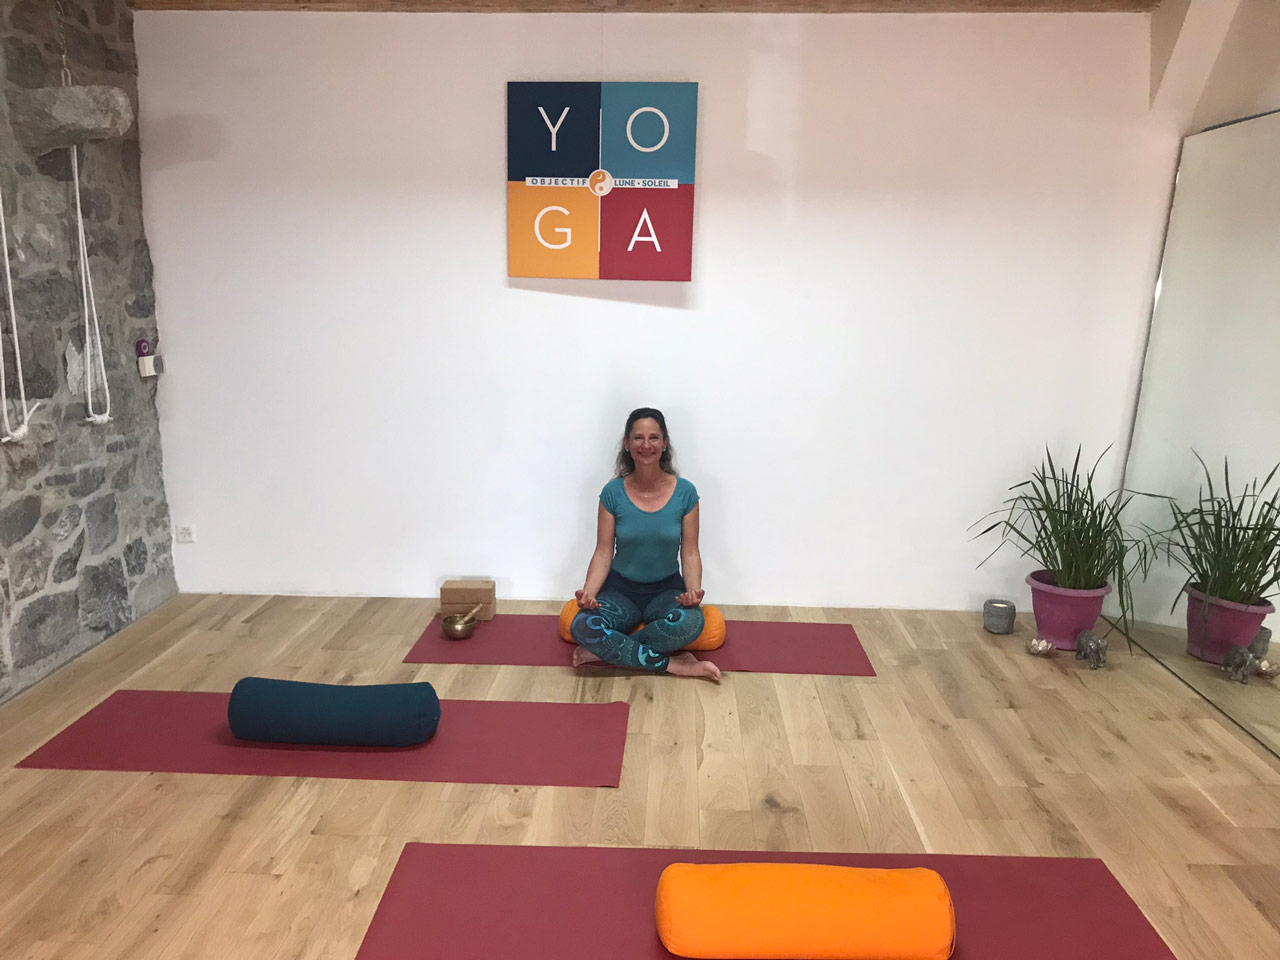 Hélène Céline Faucherre, Professeure certifiée de Yoga Iyengar